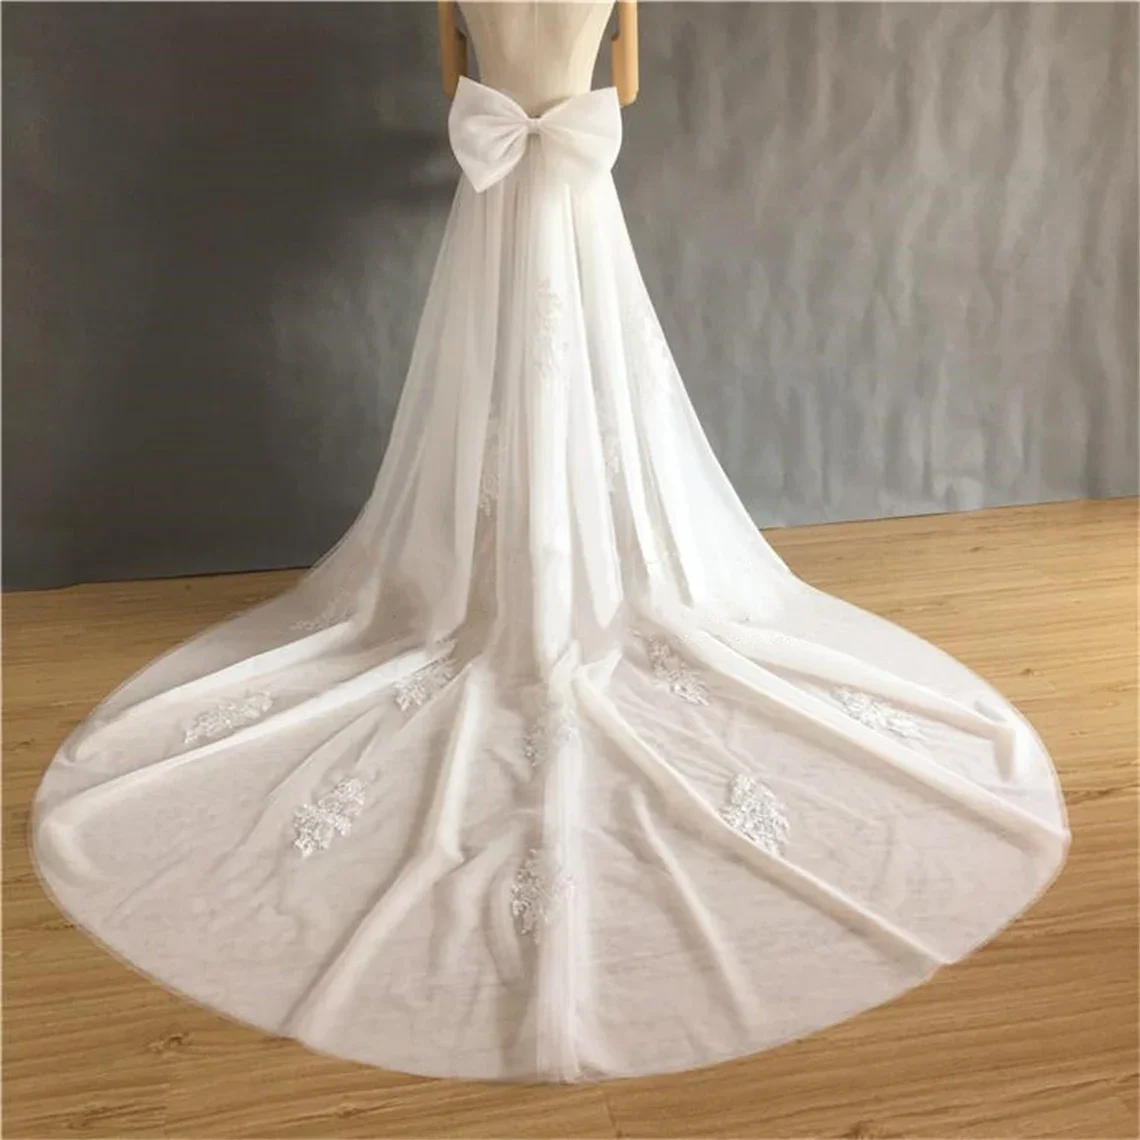 

JIERUIZE Tulle Lace Appliques Detachable Skirt Wedding Boho Removable Train For Dresses Big Bow Bridal Overskirt